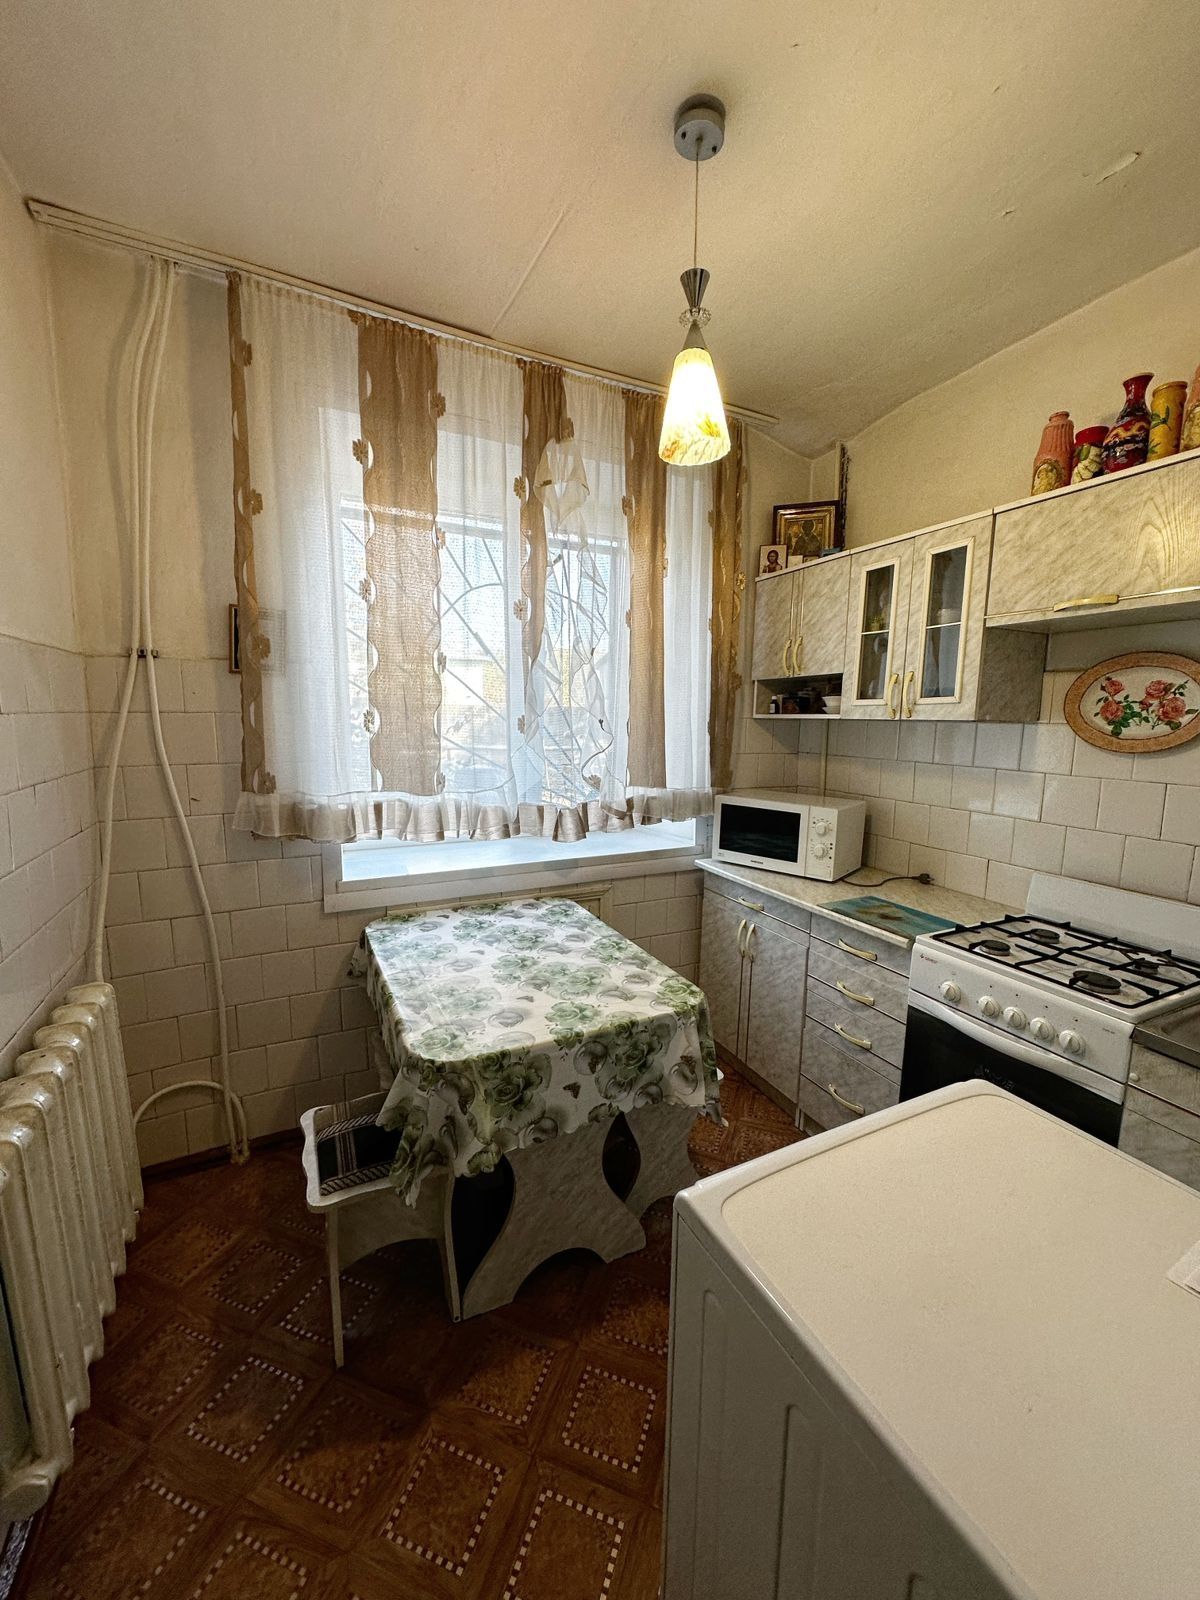 Продается 3х-комнатная квартира в районе Ремзавод